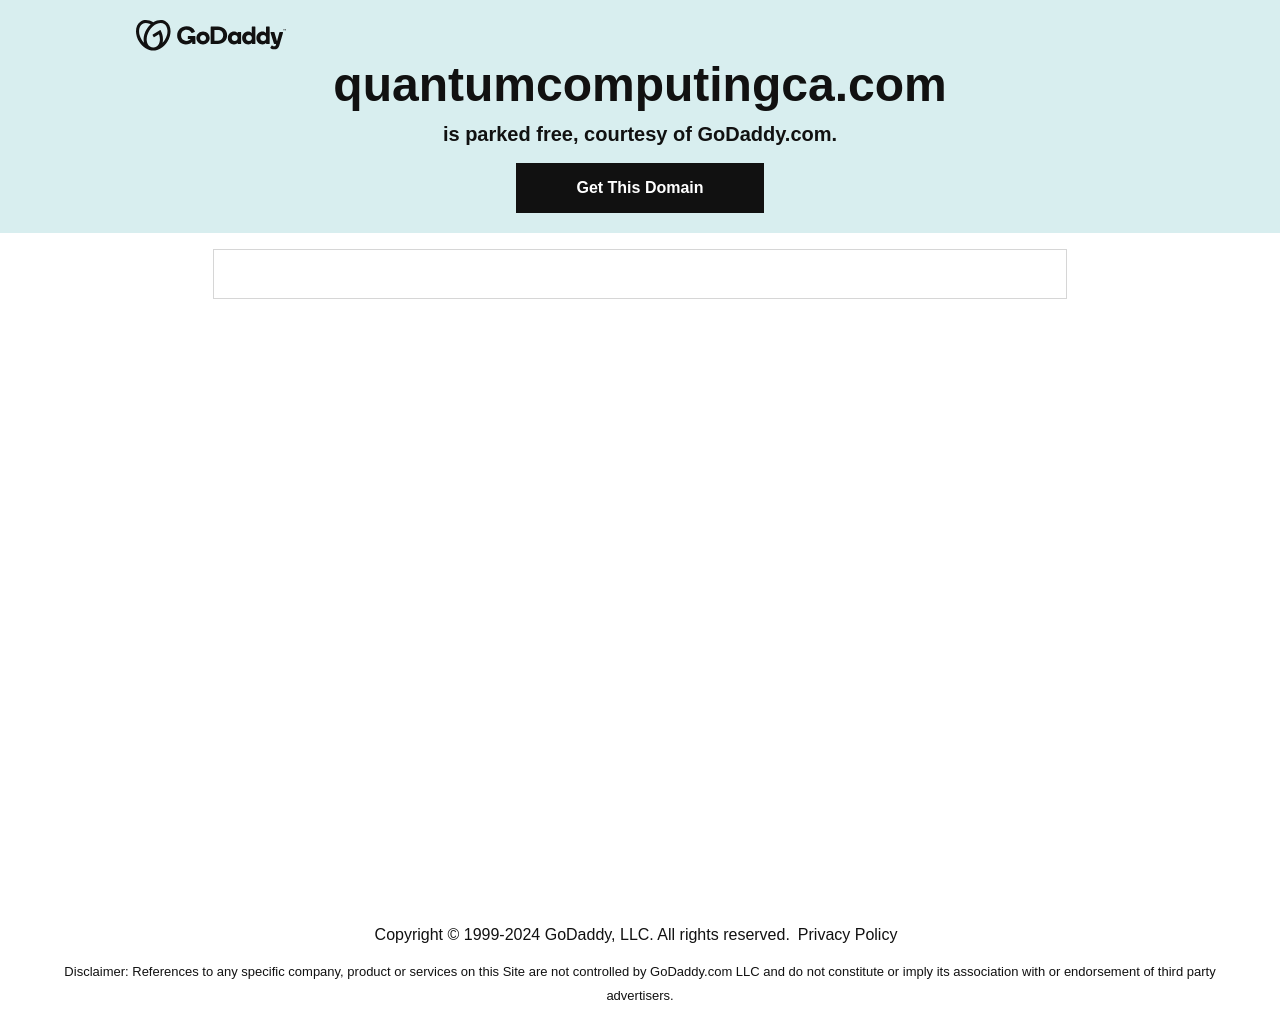 quantumcomputingca.com